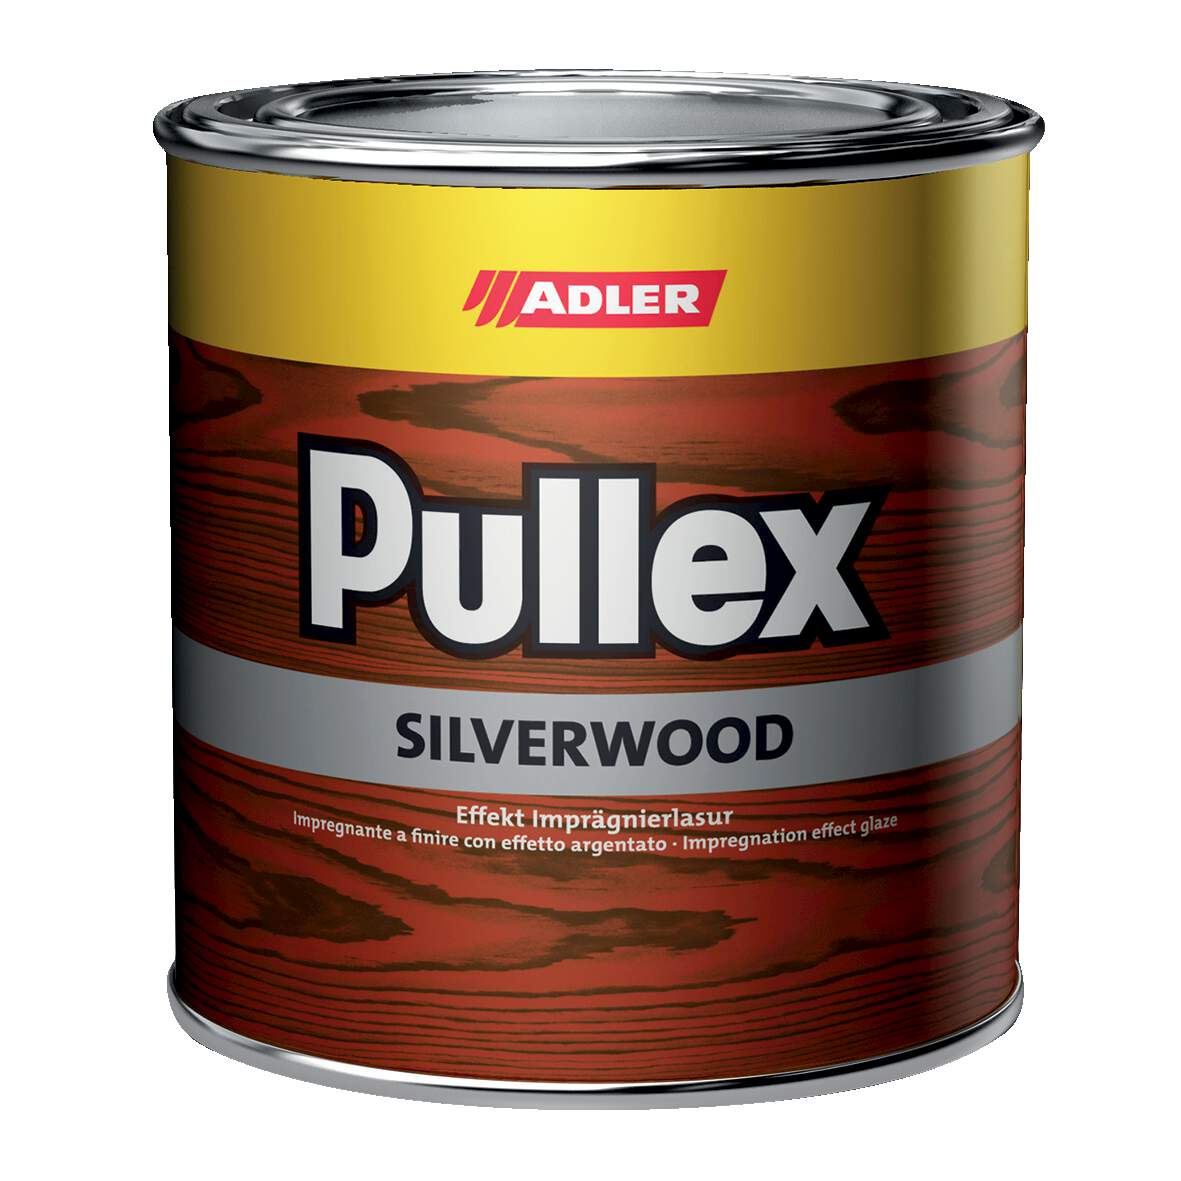 1095625 - Pullex-Silverwood altgr. 750ml